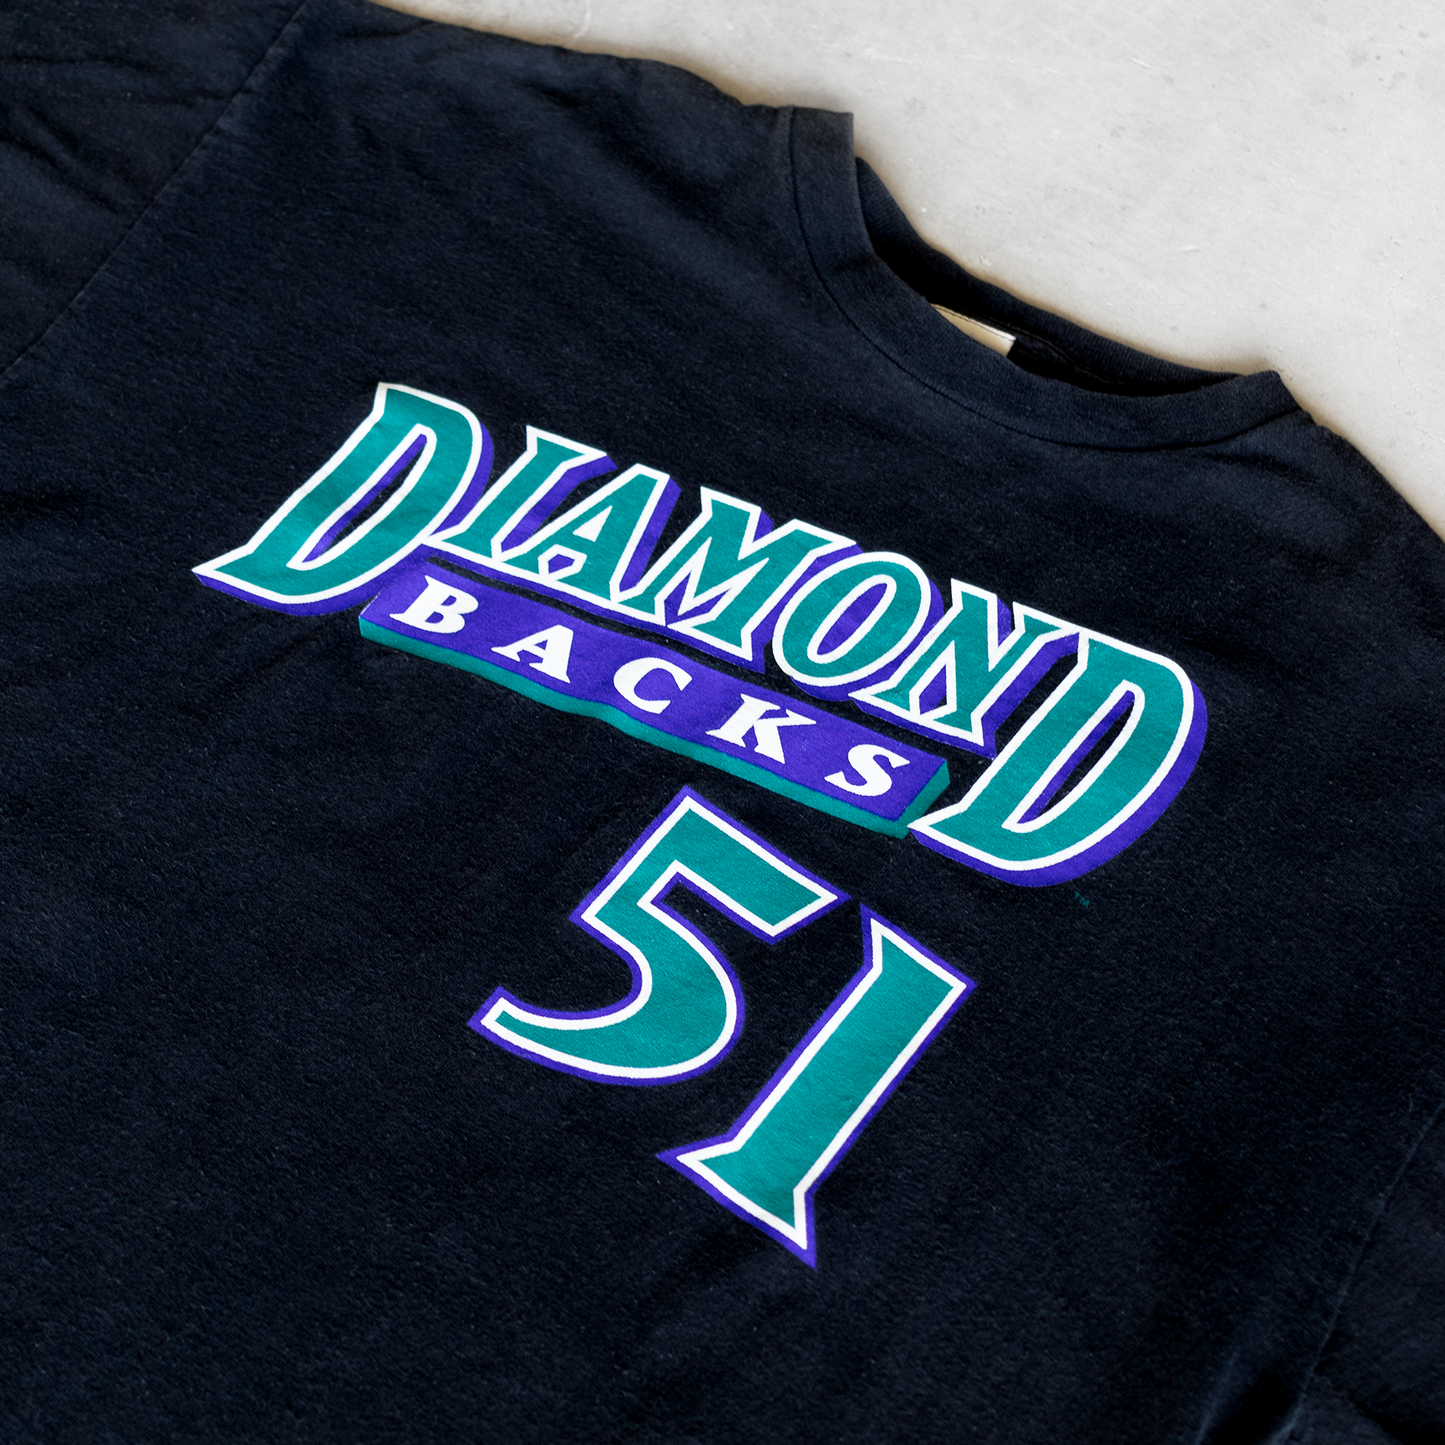 Vintage Arizona Diamondbacks Randy Johnson #51 Graphic T-Shirt (XL)